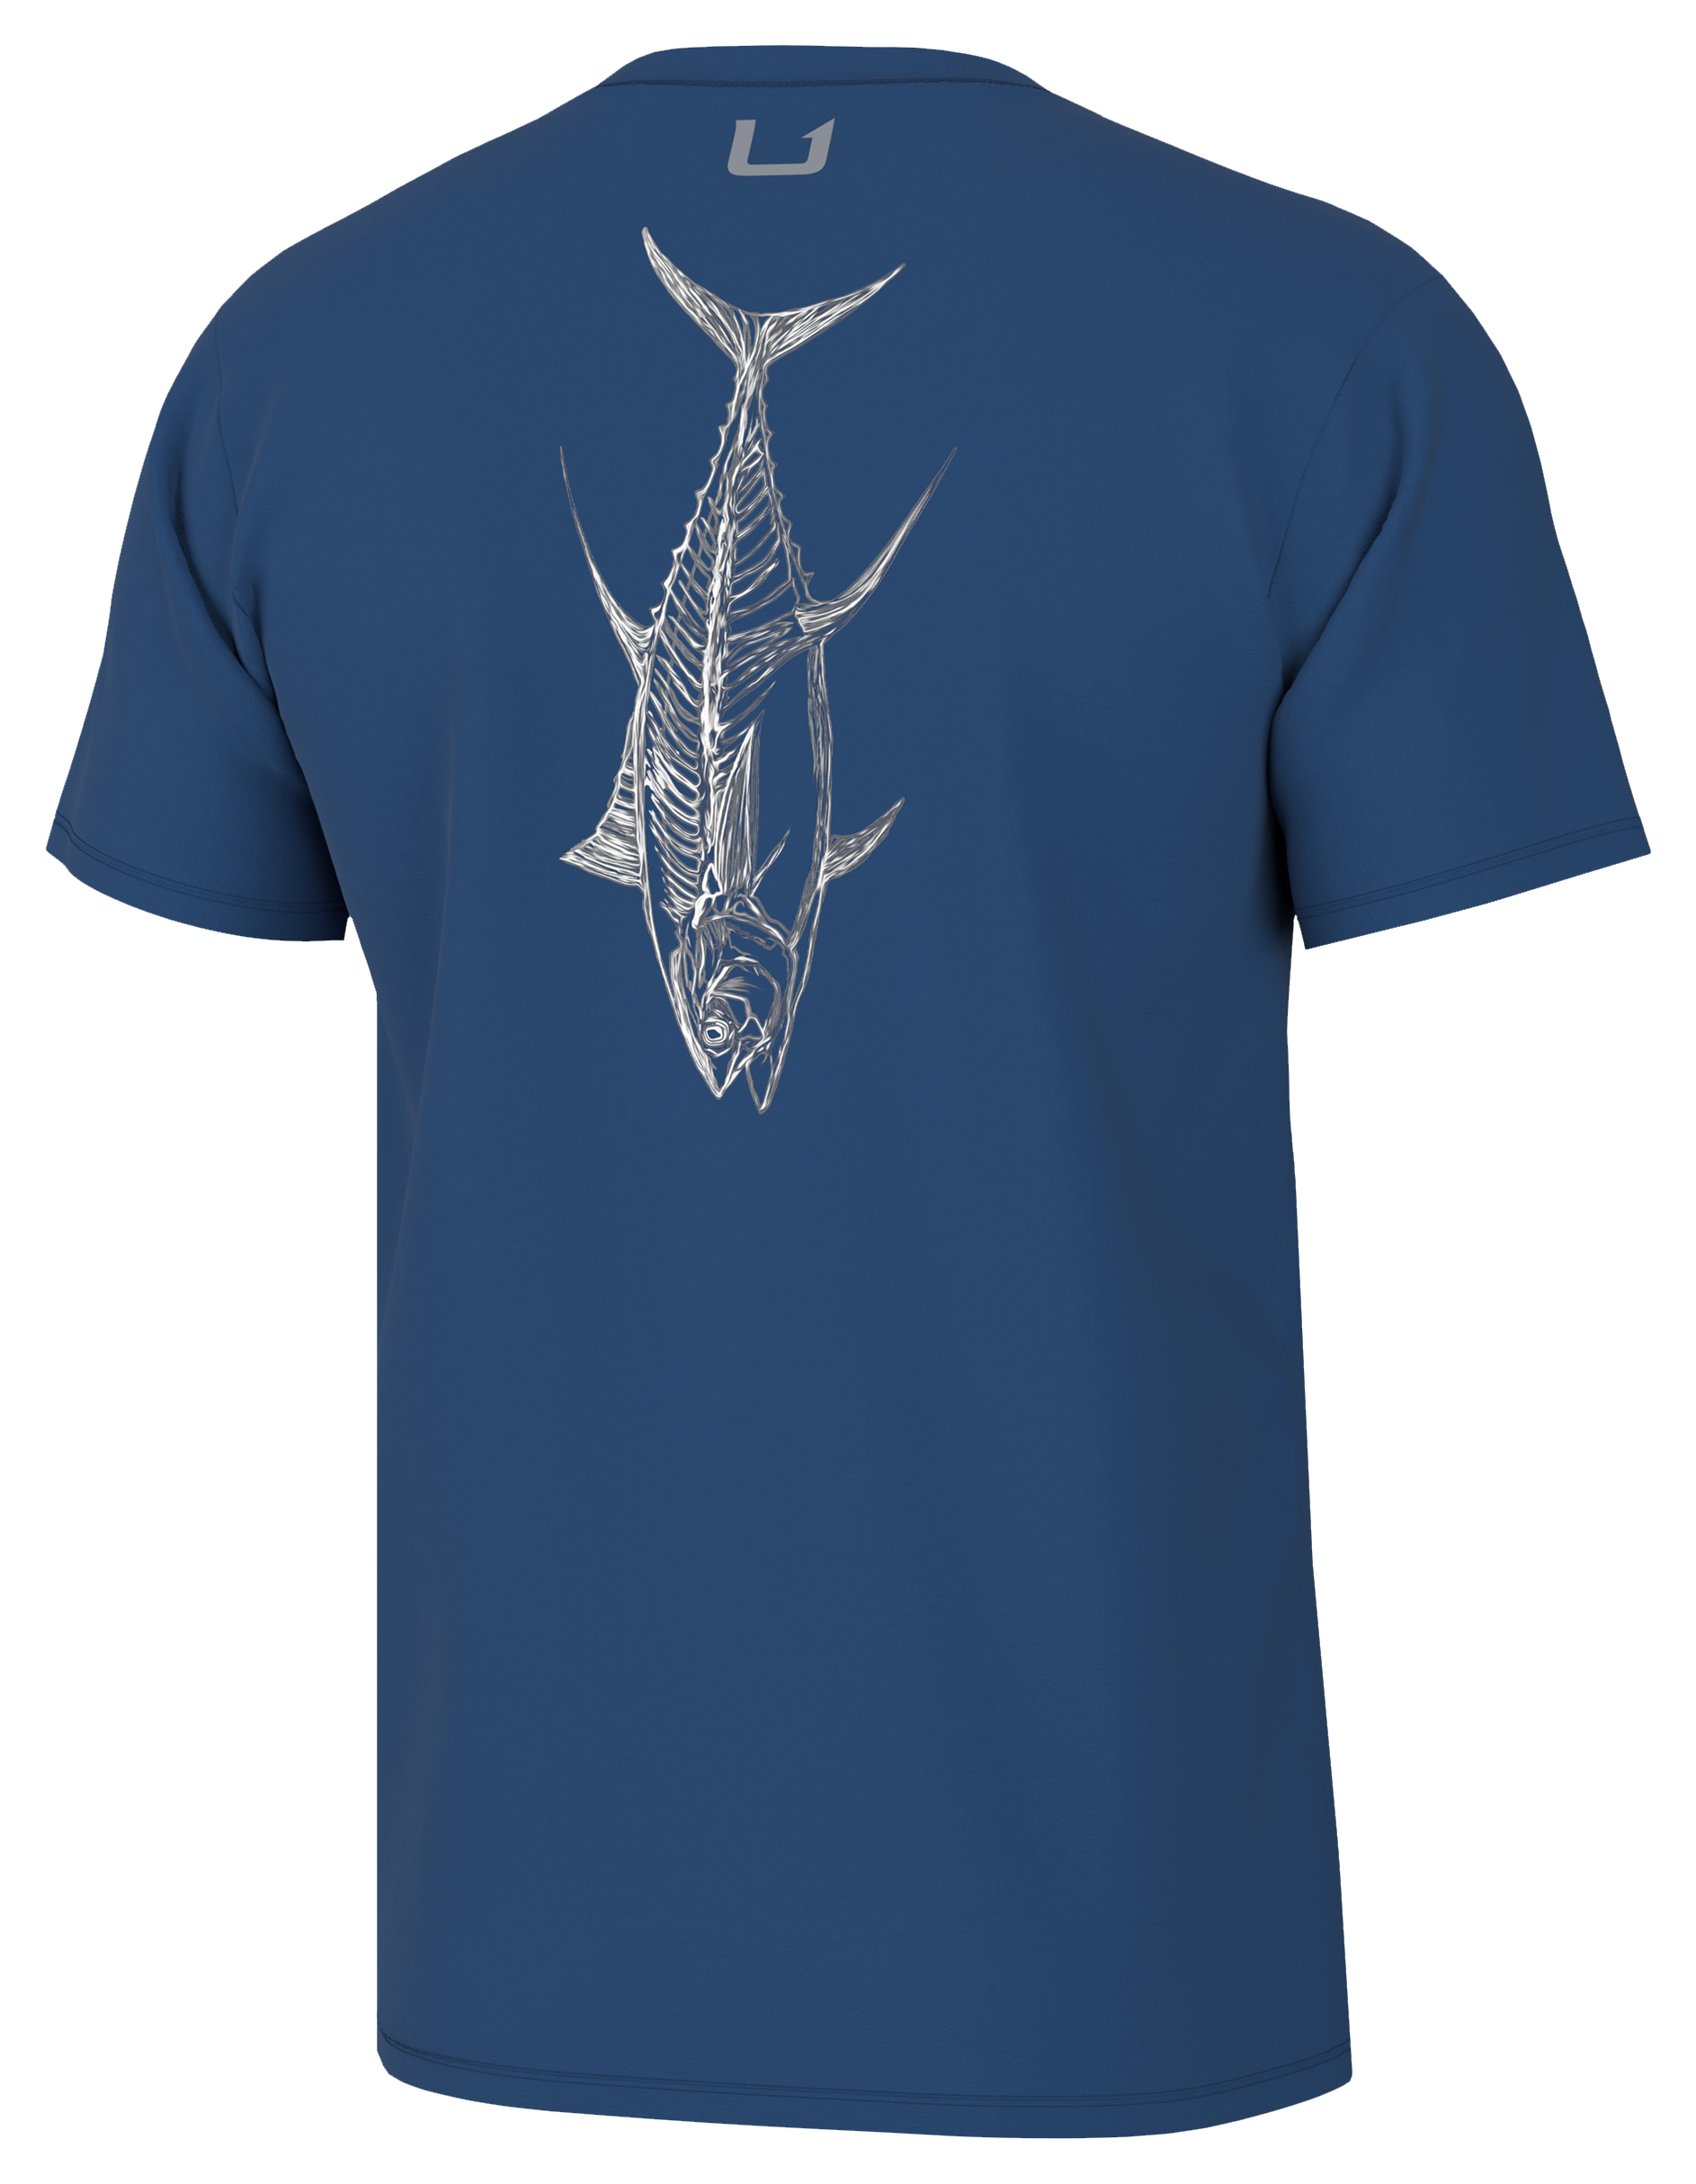 Huk Men's Tuna Sketch T-Shirt, XL, Set Sail